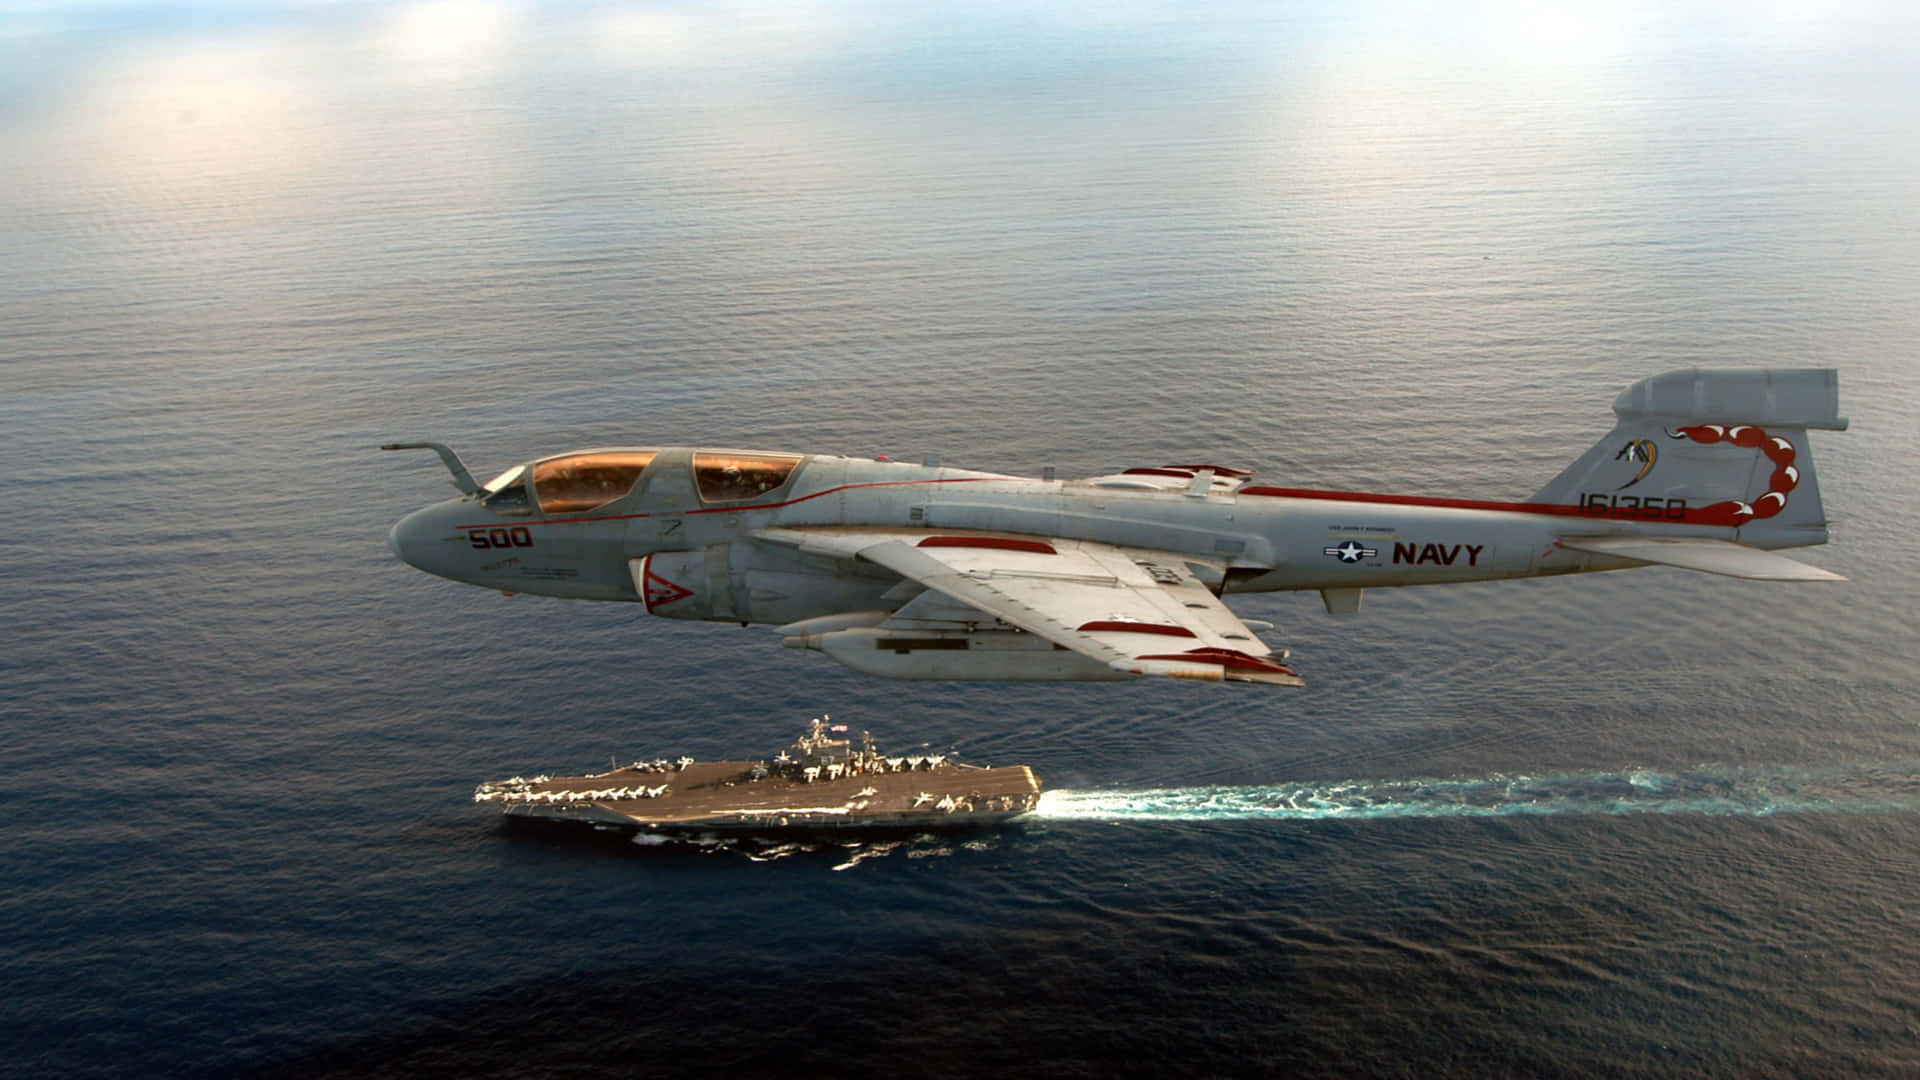 1080pjumbo Jets Northrop Grumman Prowler Bakgrund.